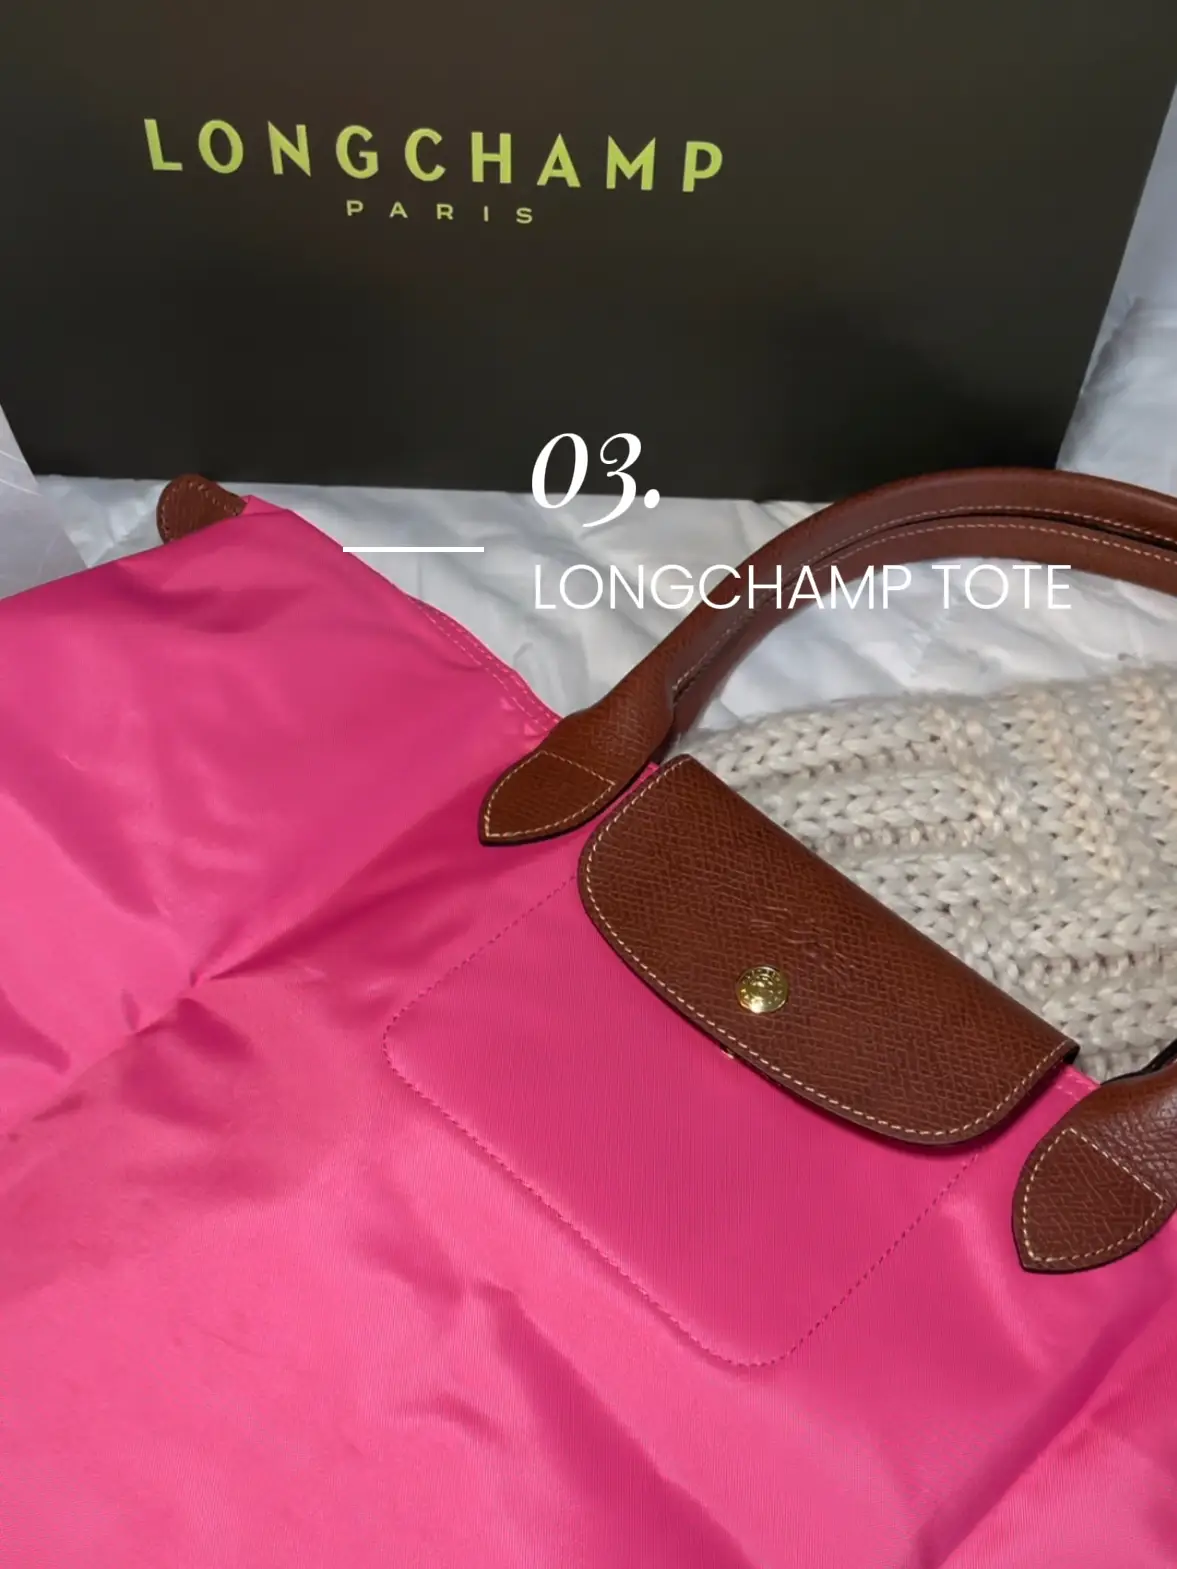 Your favorite designer brand? Mine is Chanel 💎 Follow